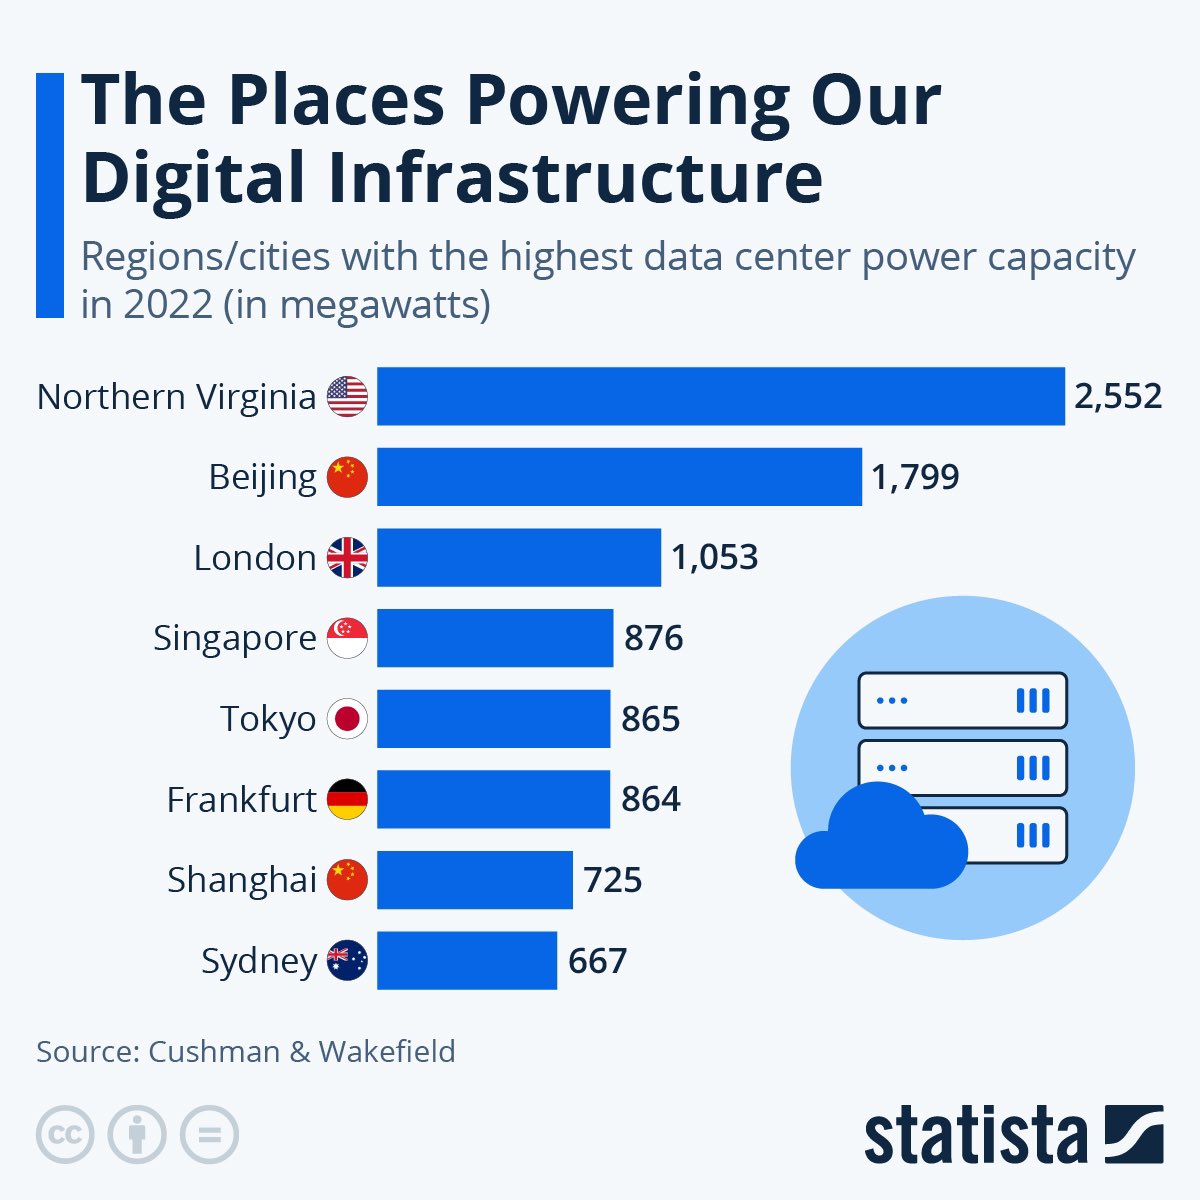 The Places Powering Our Digital Infrastructure

#Datacenter #NorthernVirginia #Beijing #London #Singapore #Tokyo #Frankfurt #Shangai #Sydney #Statista